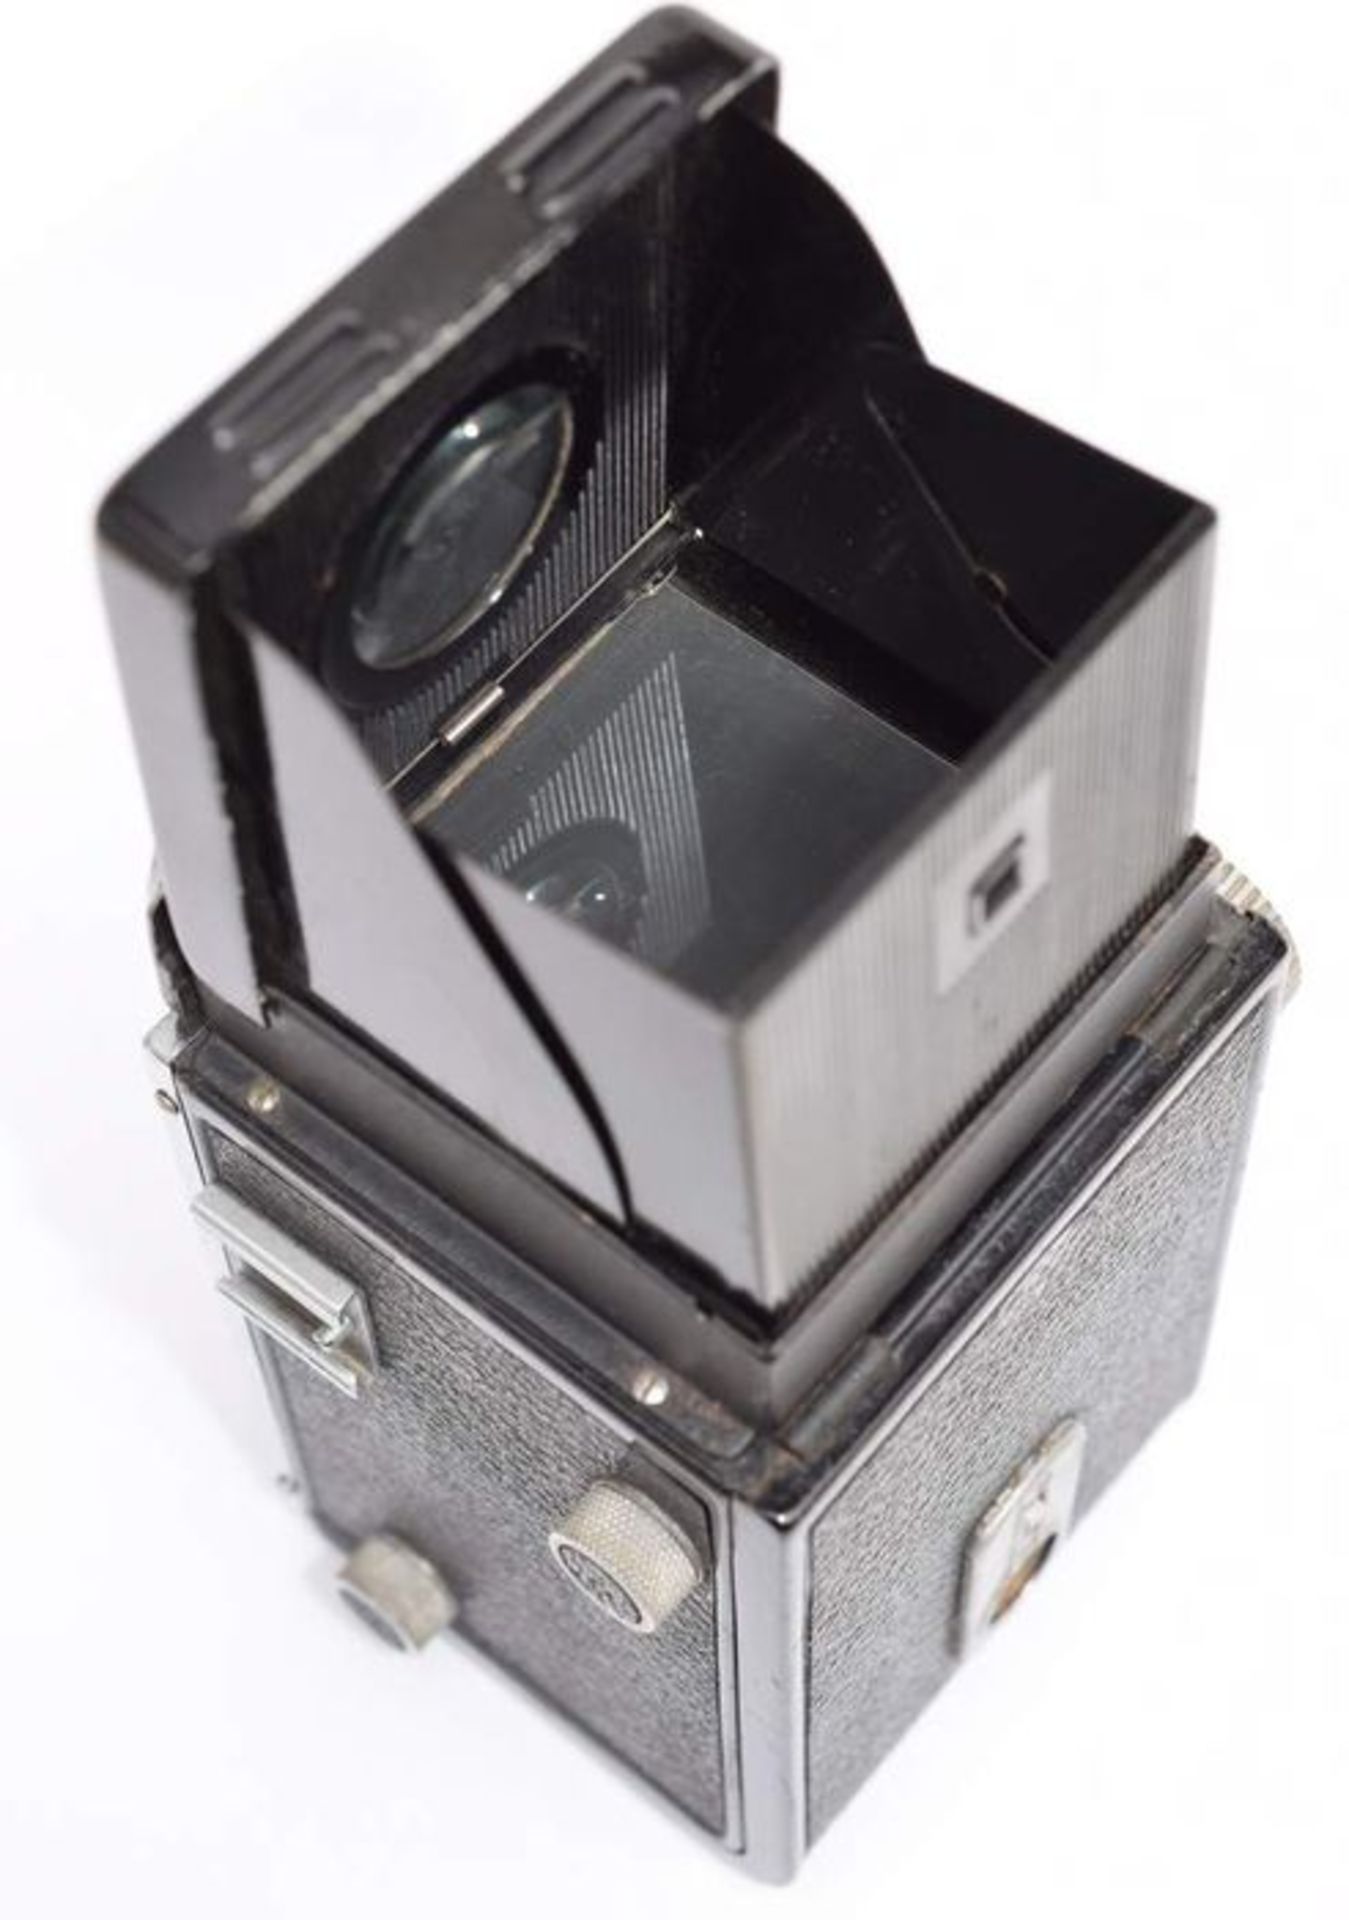 Rare Oplenflex TLR Camera by Tokiwa Seiki Works in Tokyo, Japan - Image 4 of 8